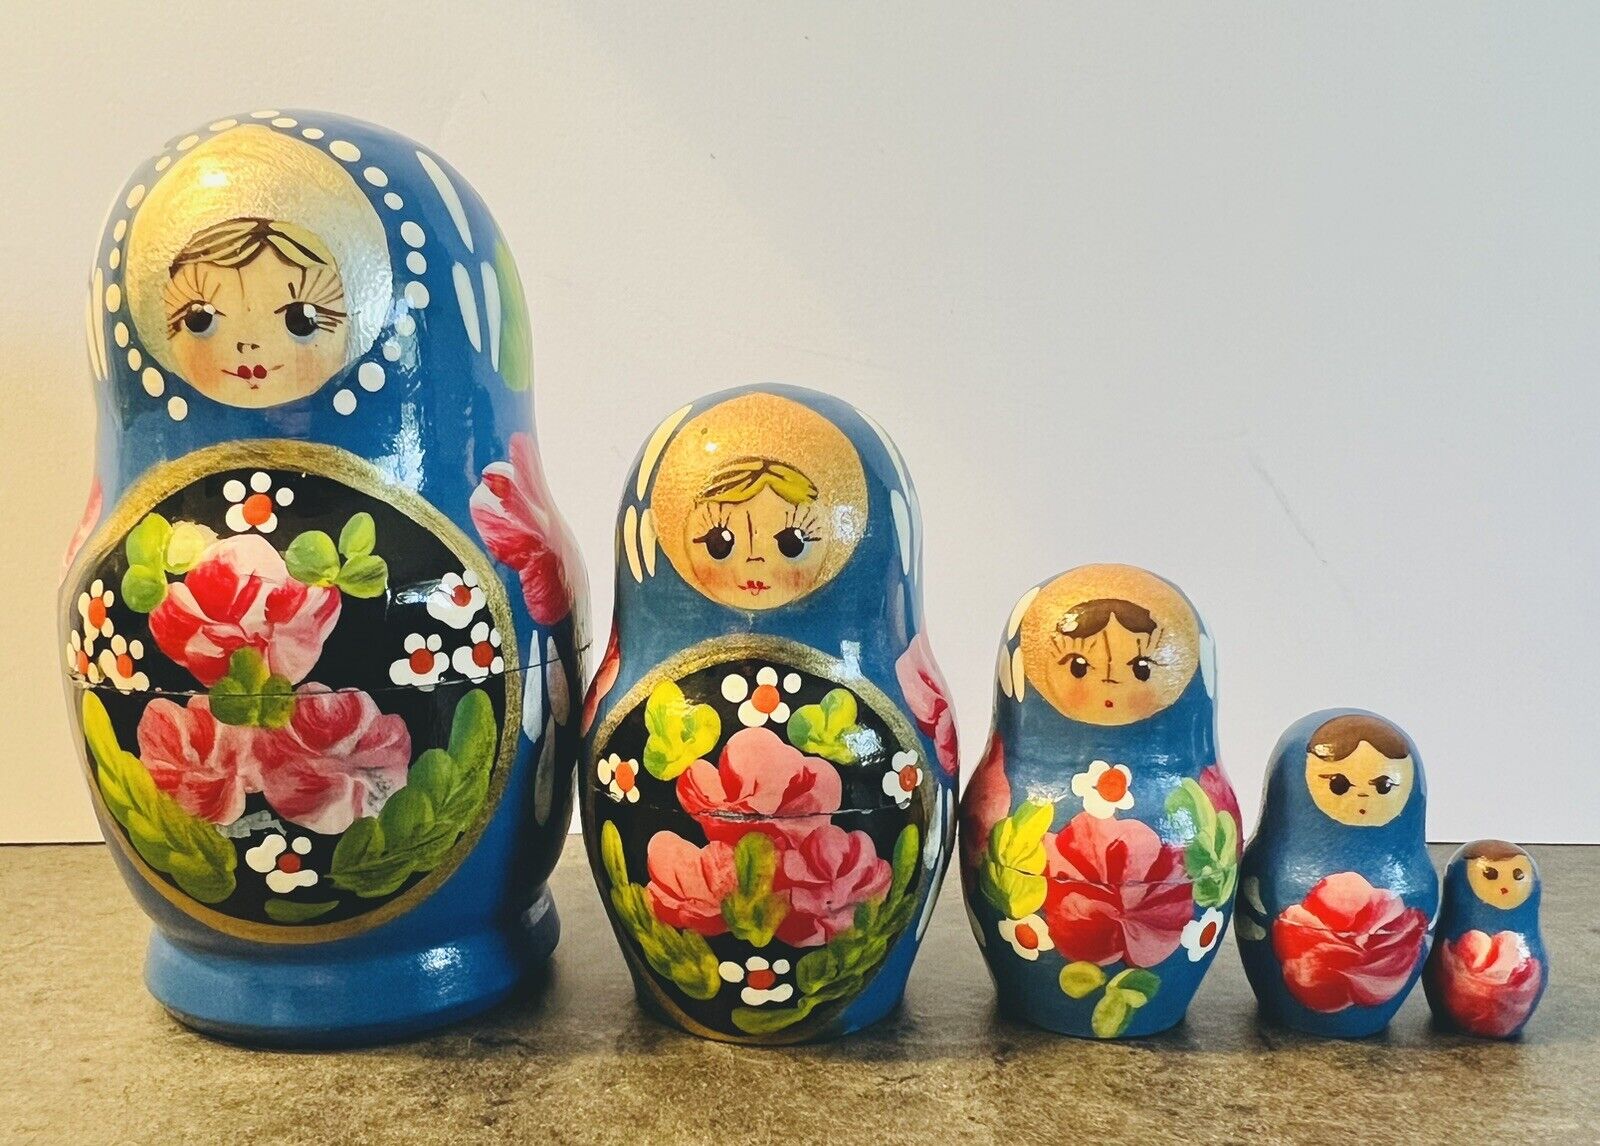 5 Russian Nesting Dolls Matryoshka Wood Painted Stacking Dolls 3.5”-.75” Signed